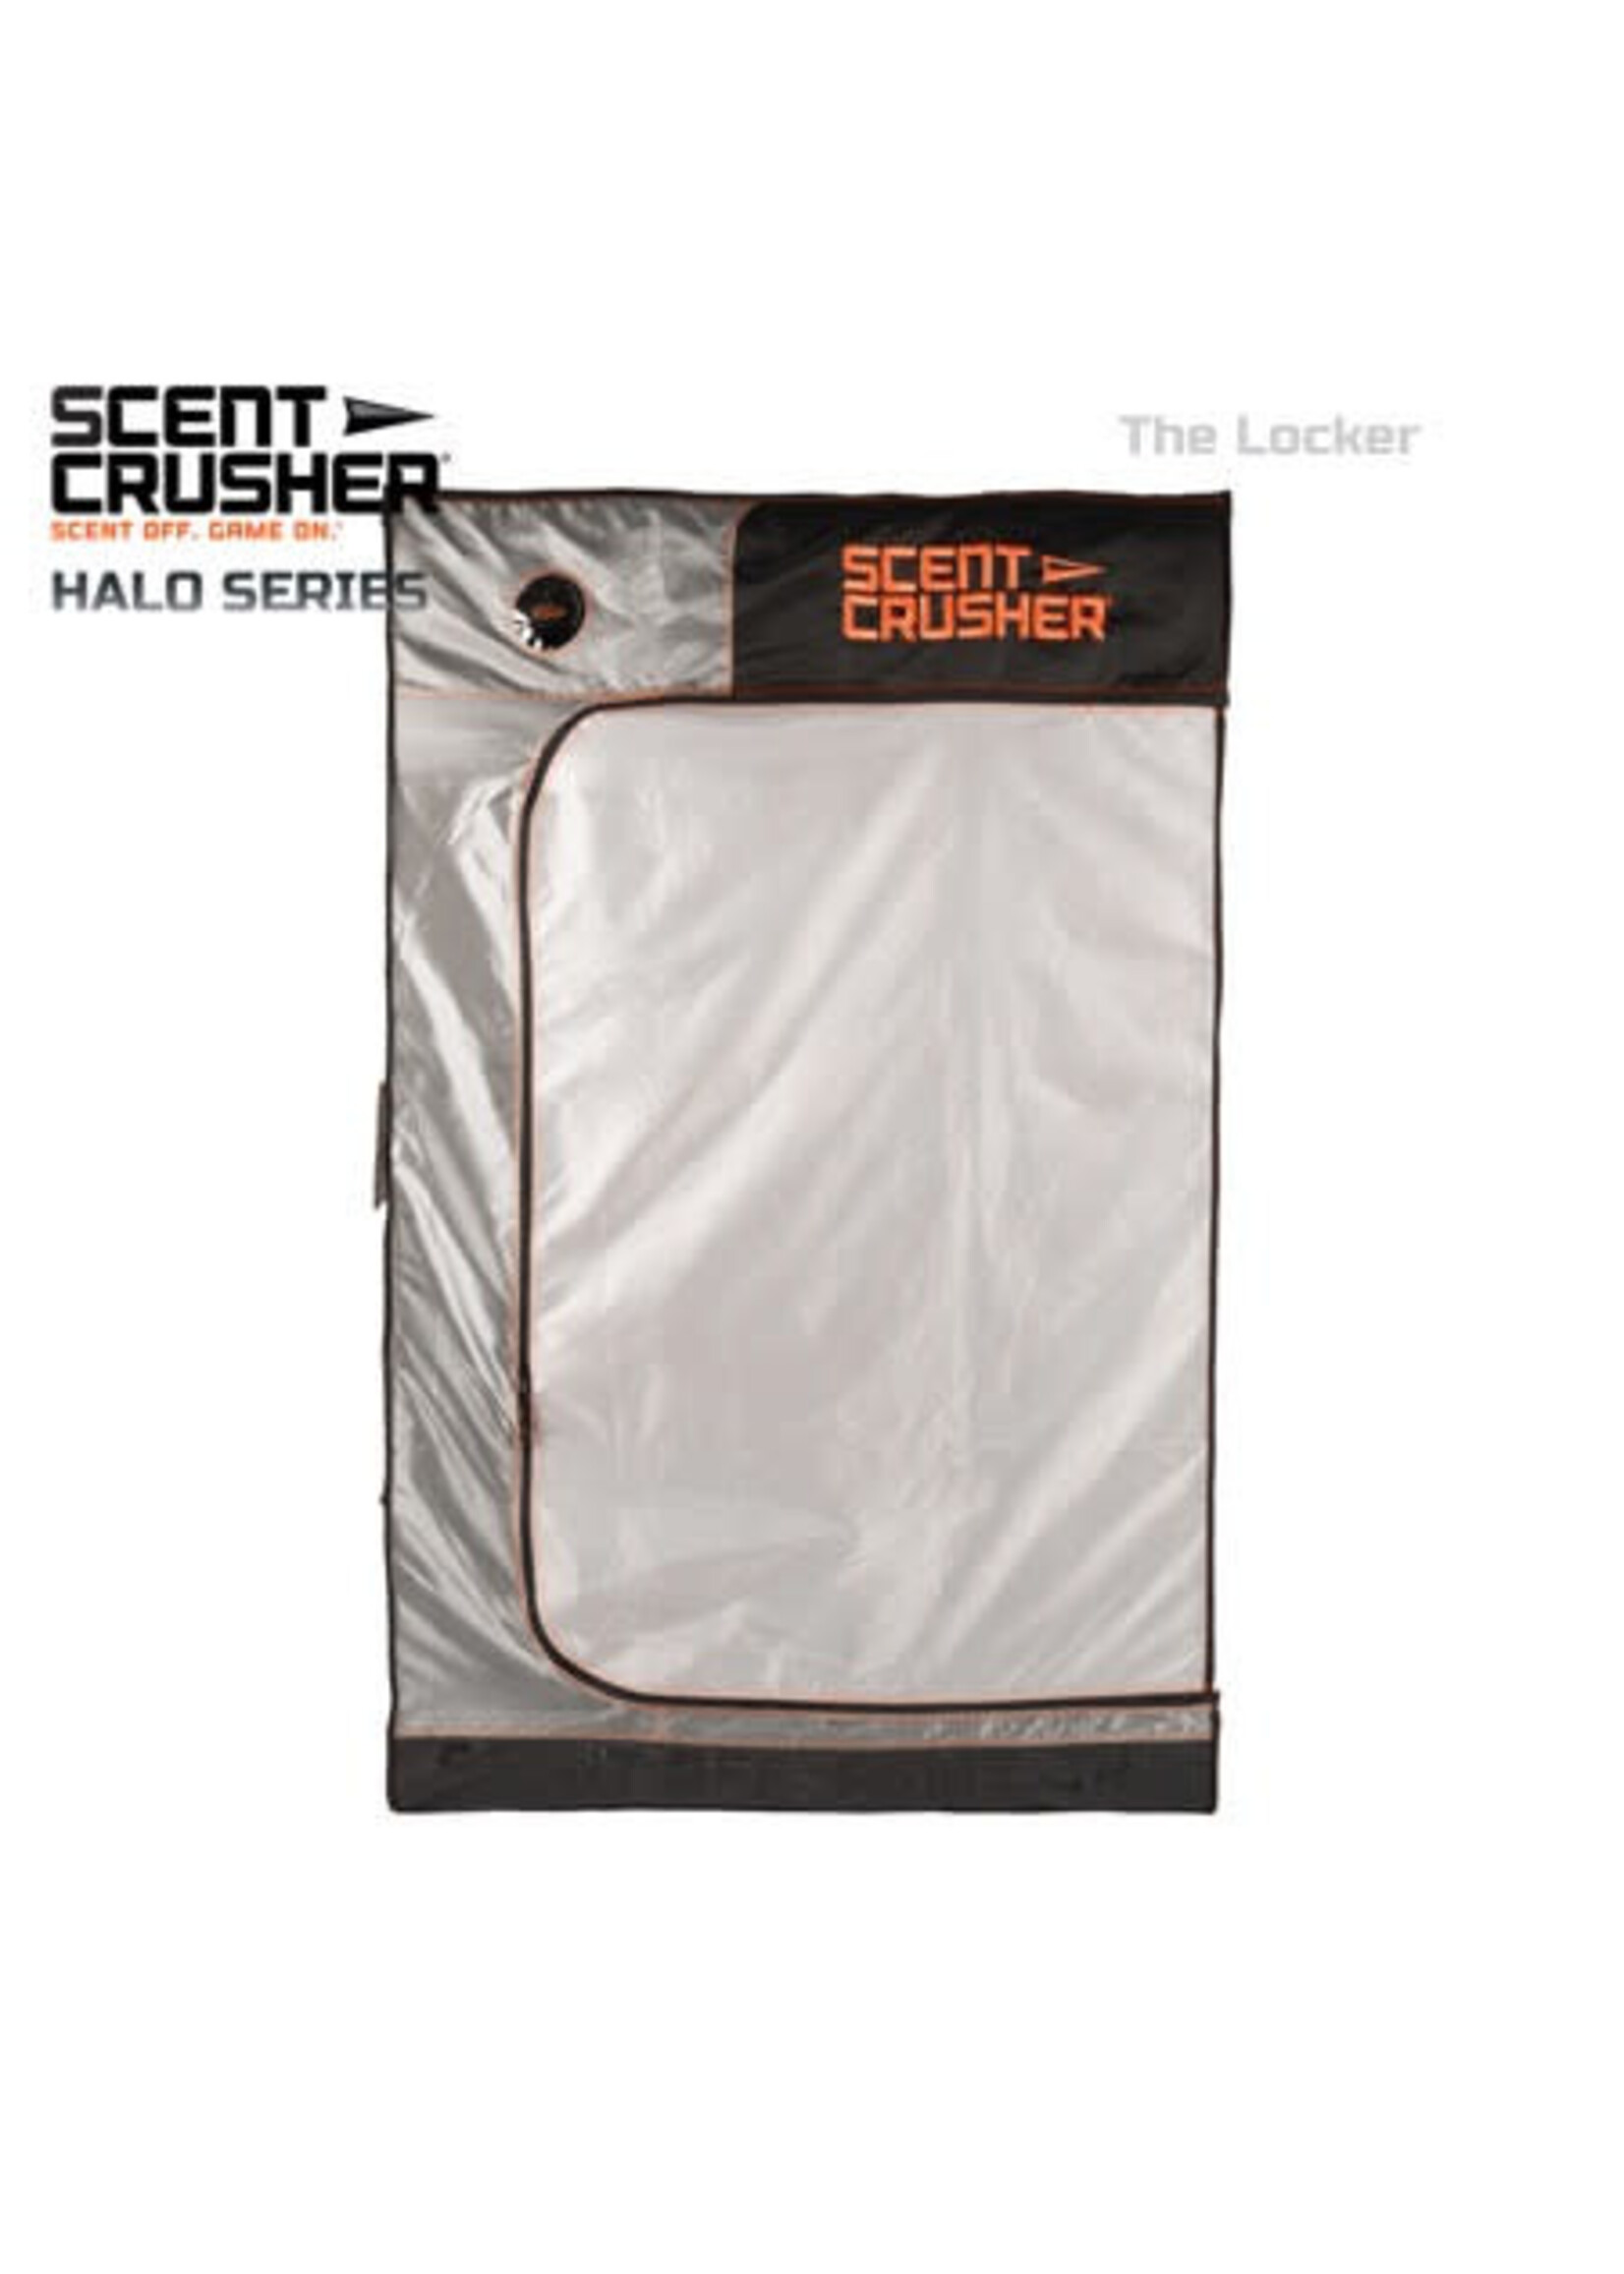 scent crusher halo series the locker